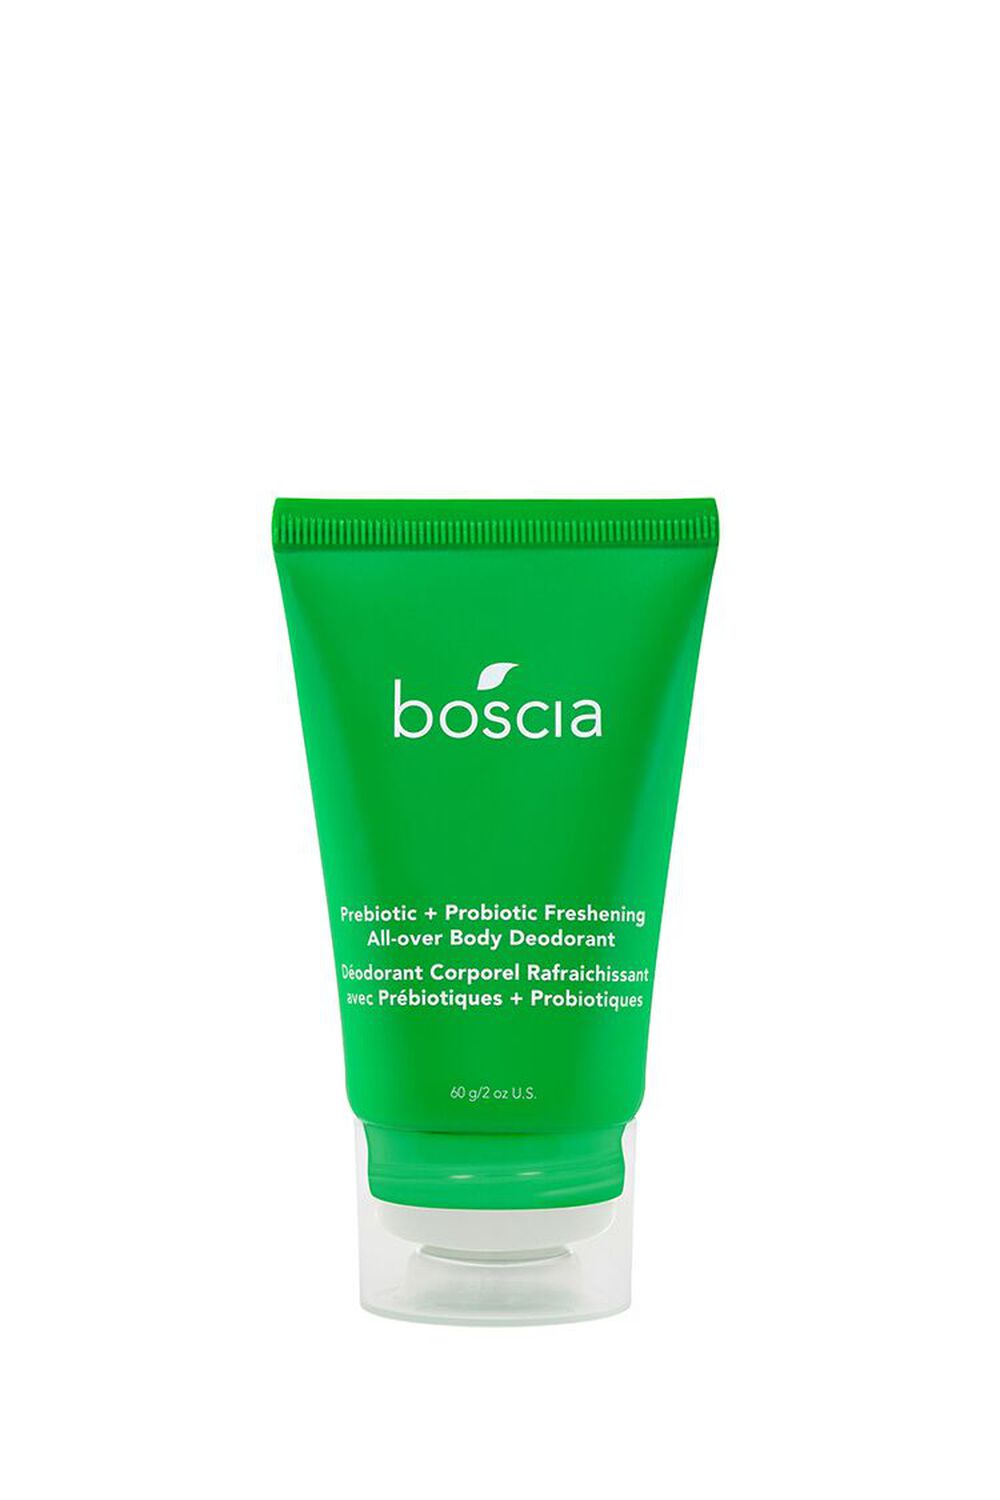 boscia Prebiotic + Probiotic Freshening All-over Body Deodorant, image 2